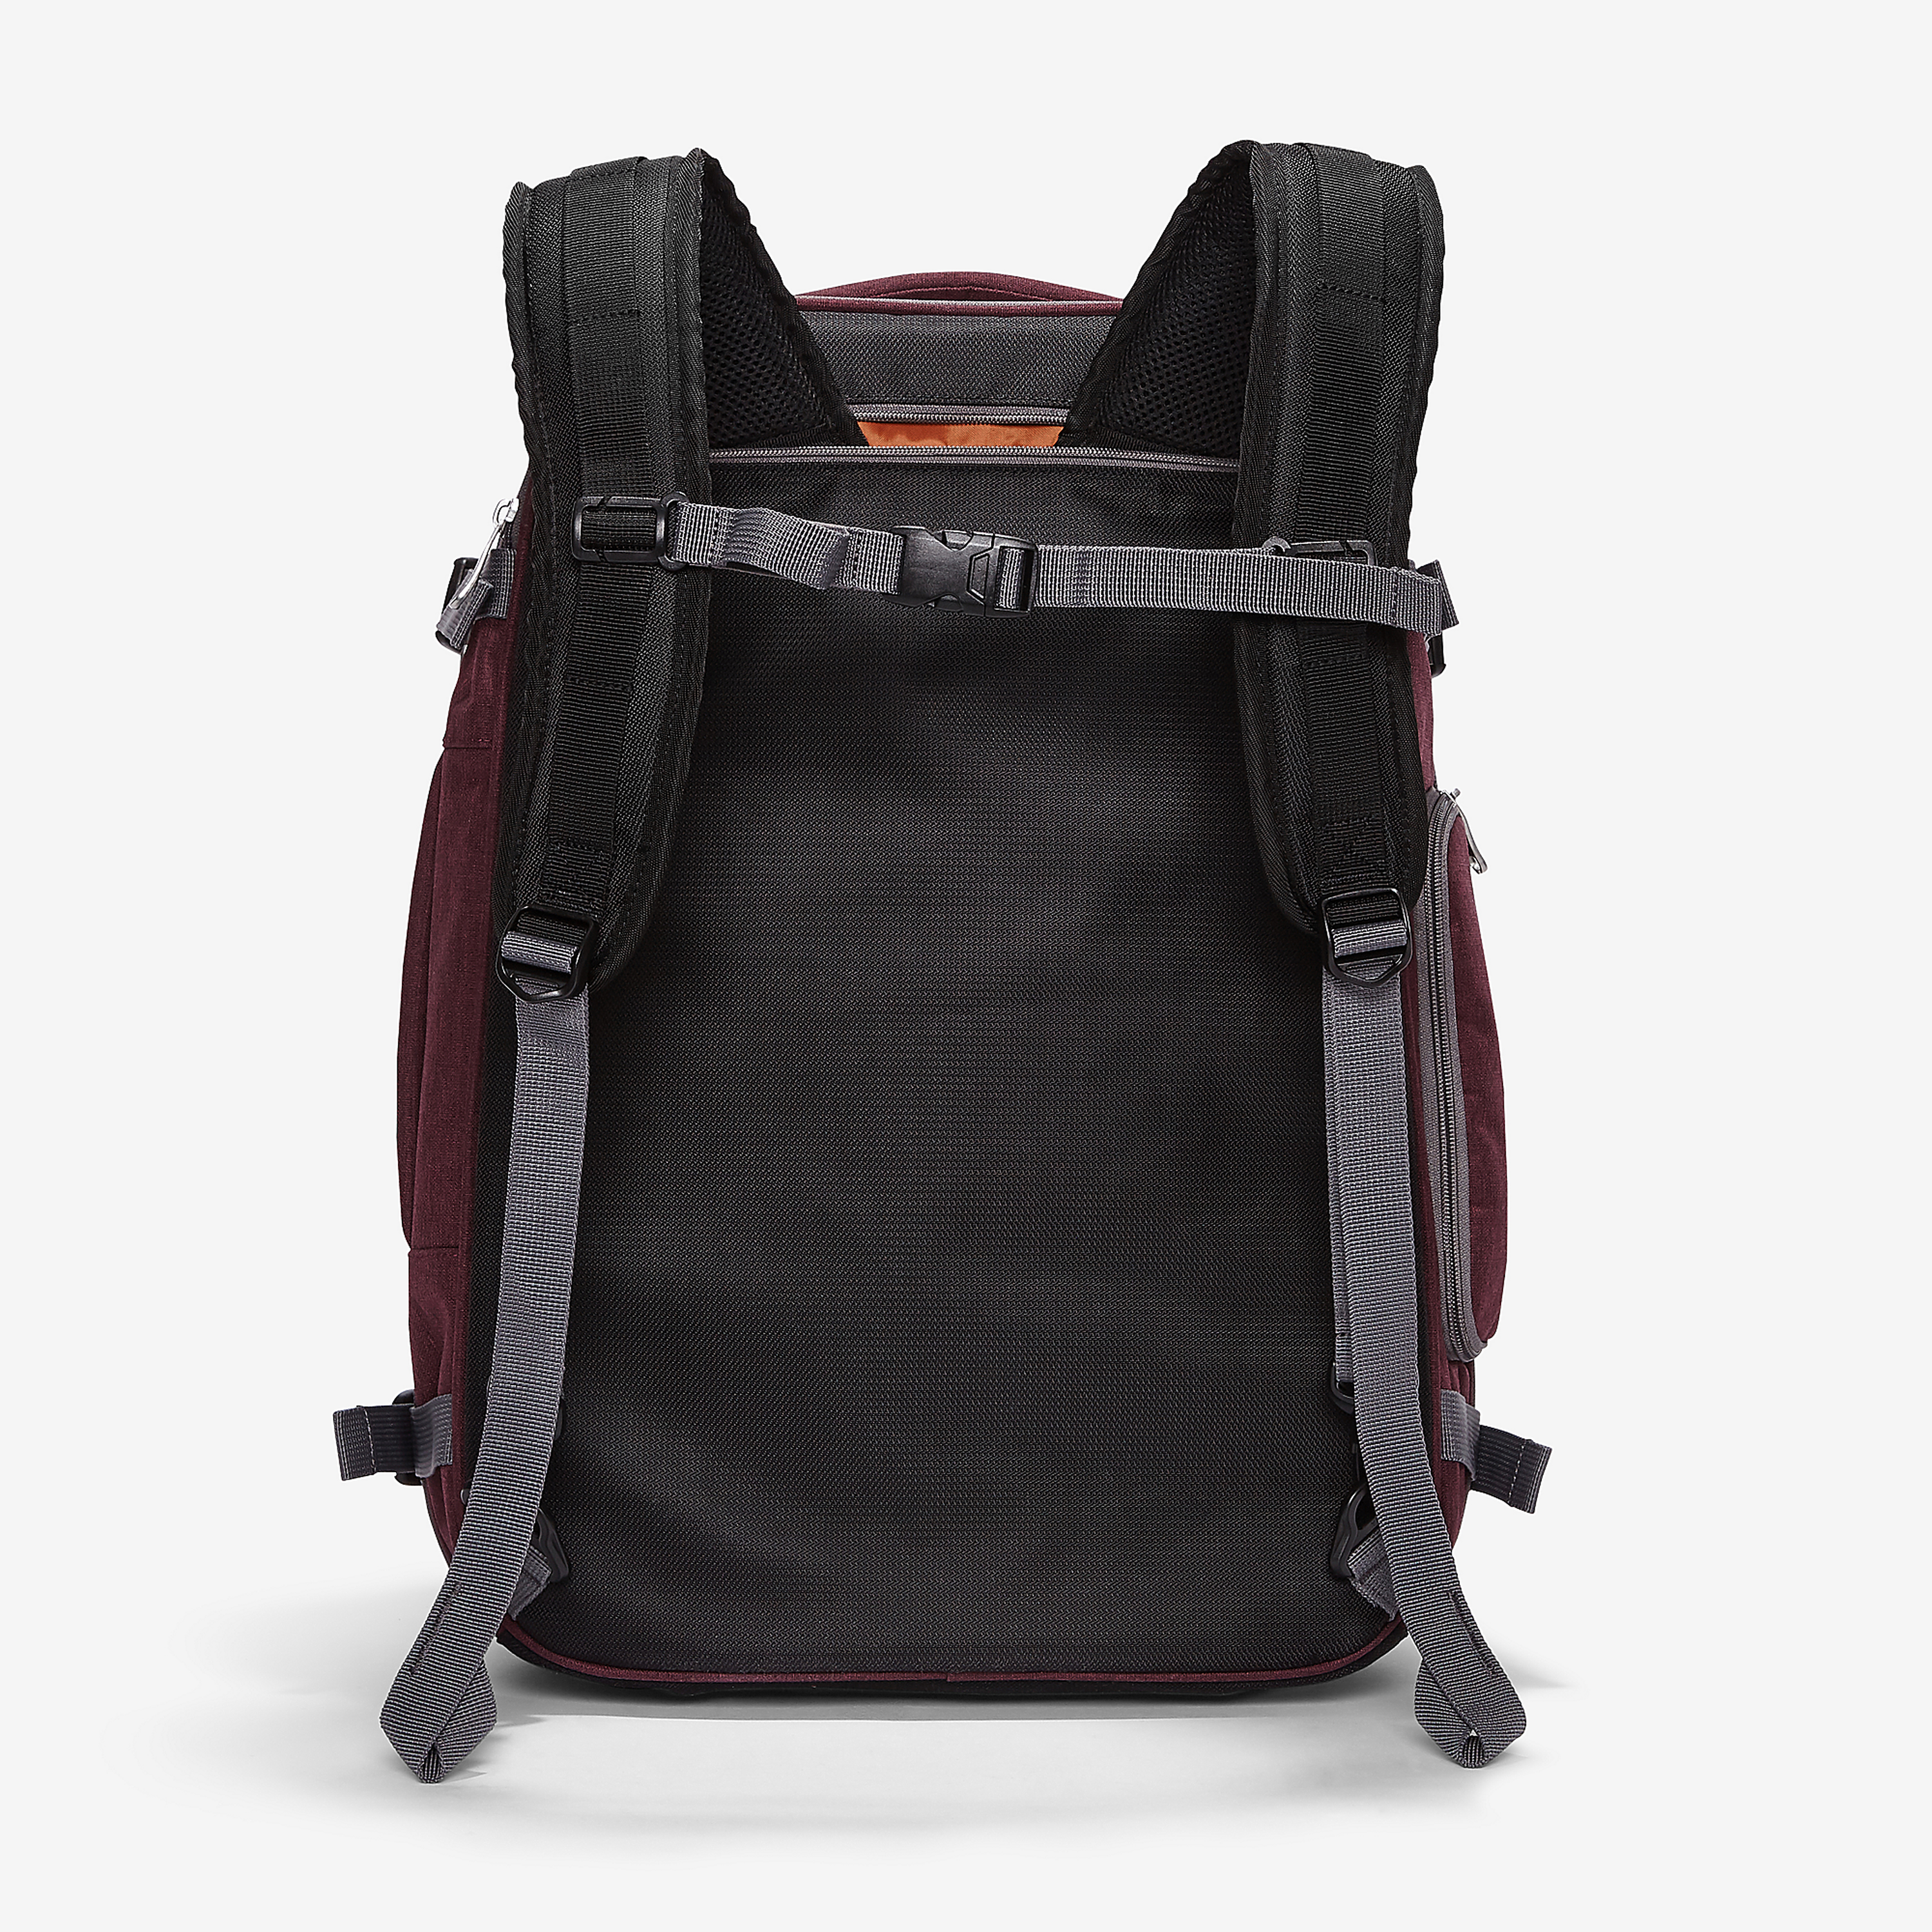 Buy Mother Lode Jr Travel Backpack for USD 99.99